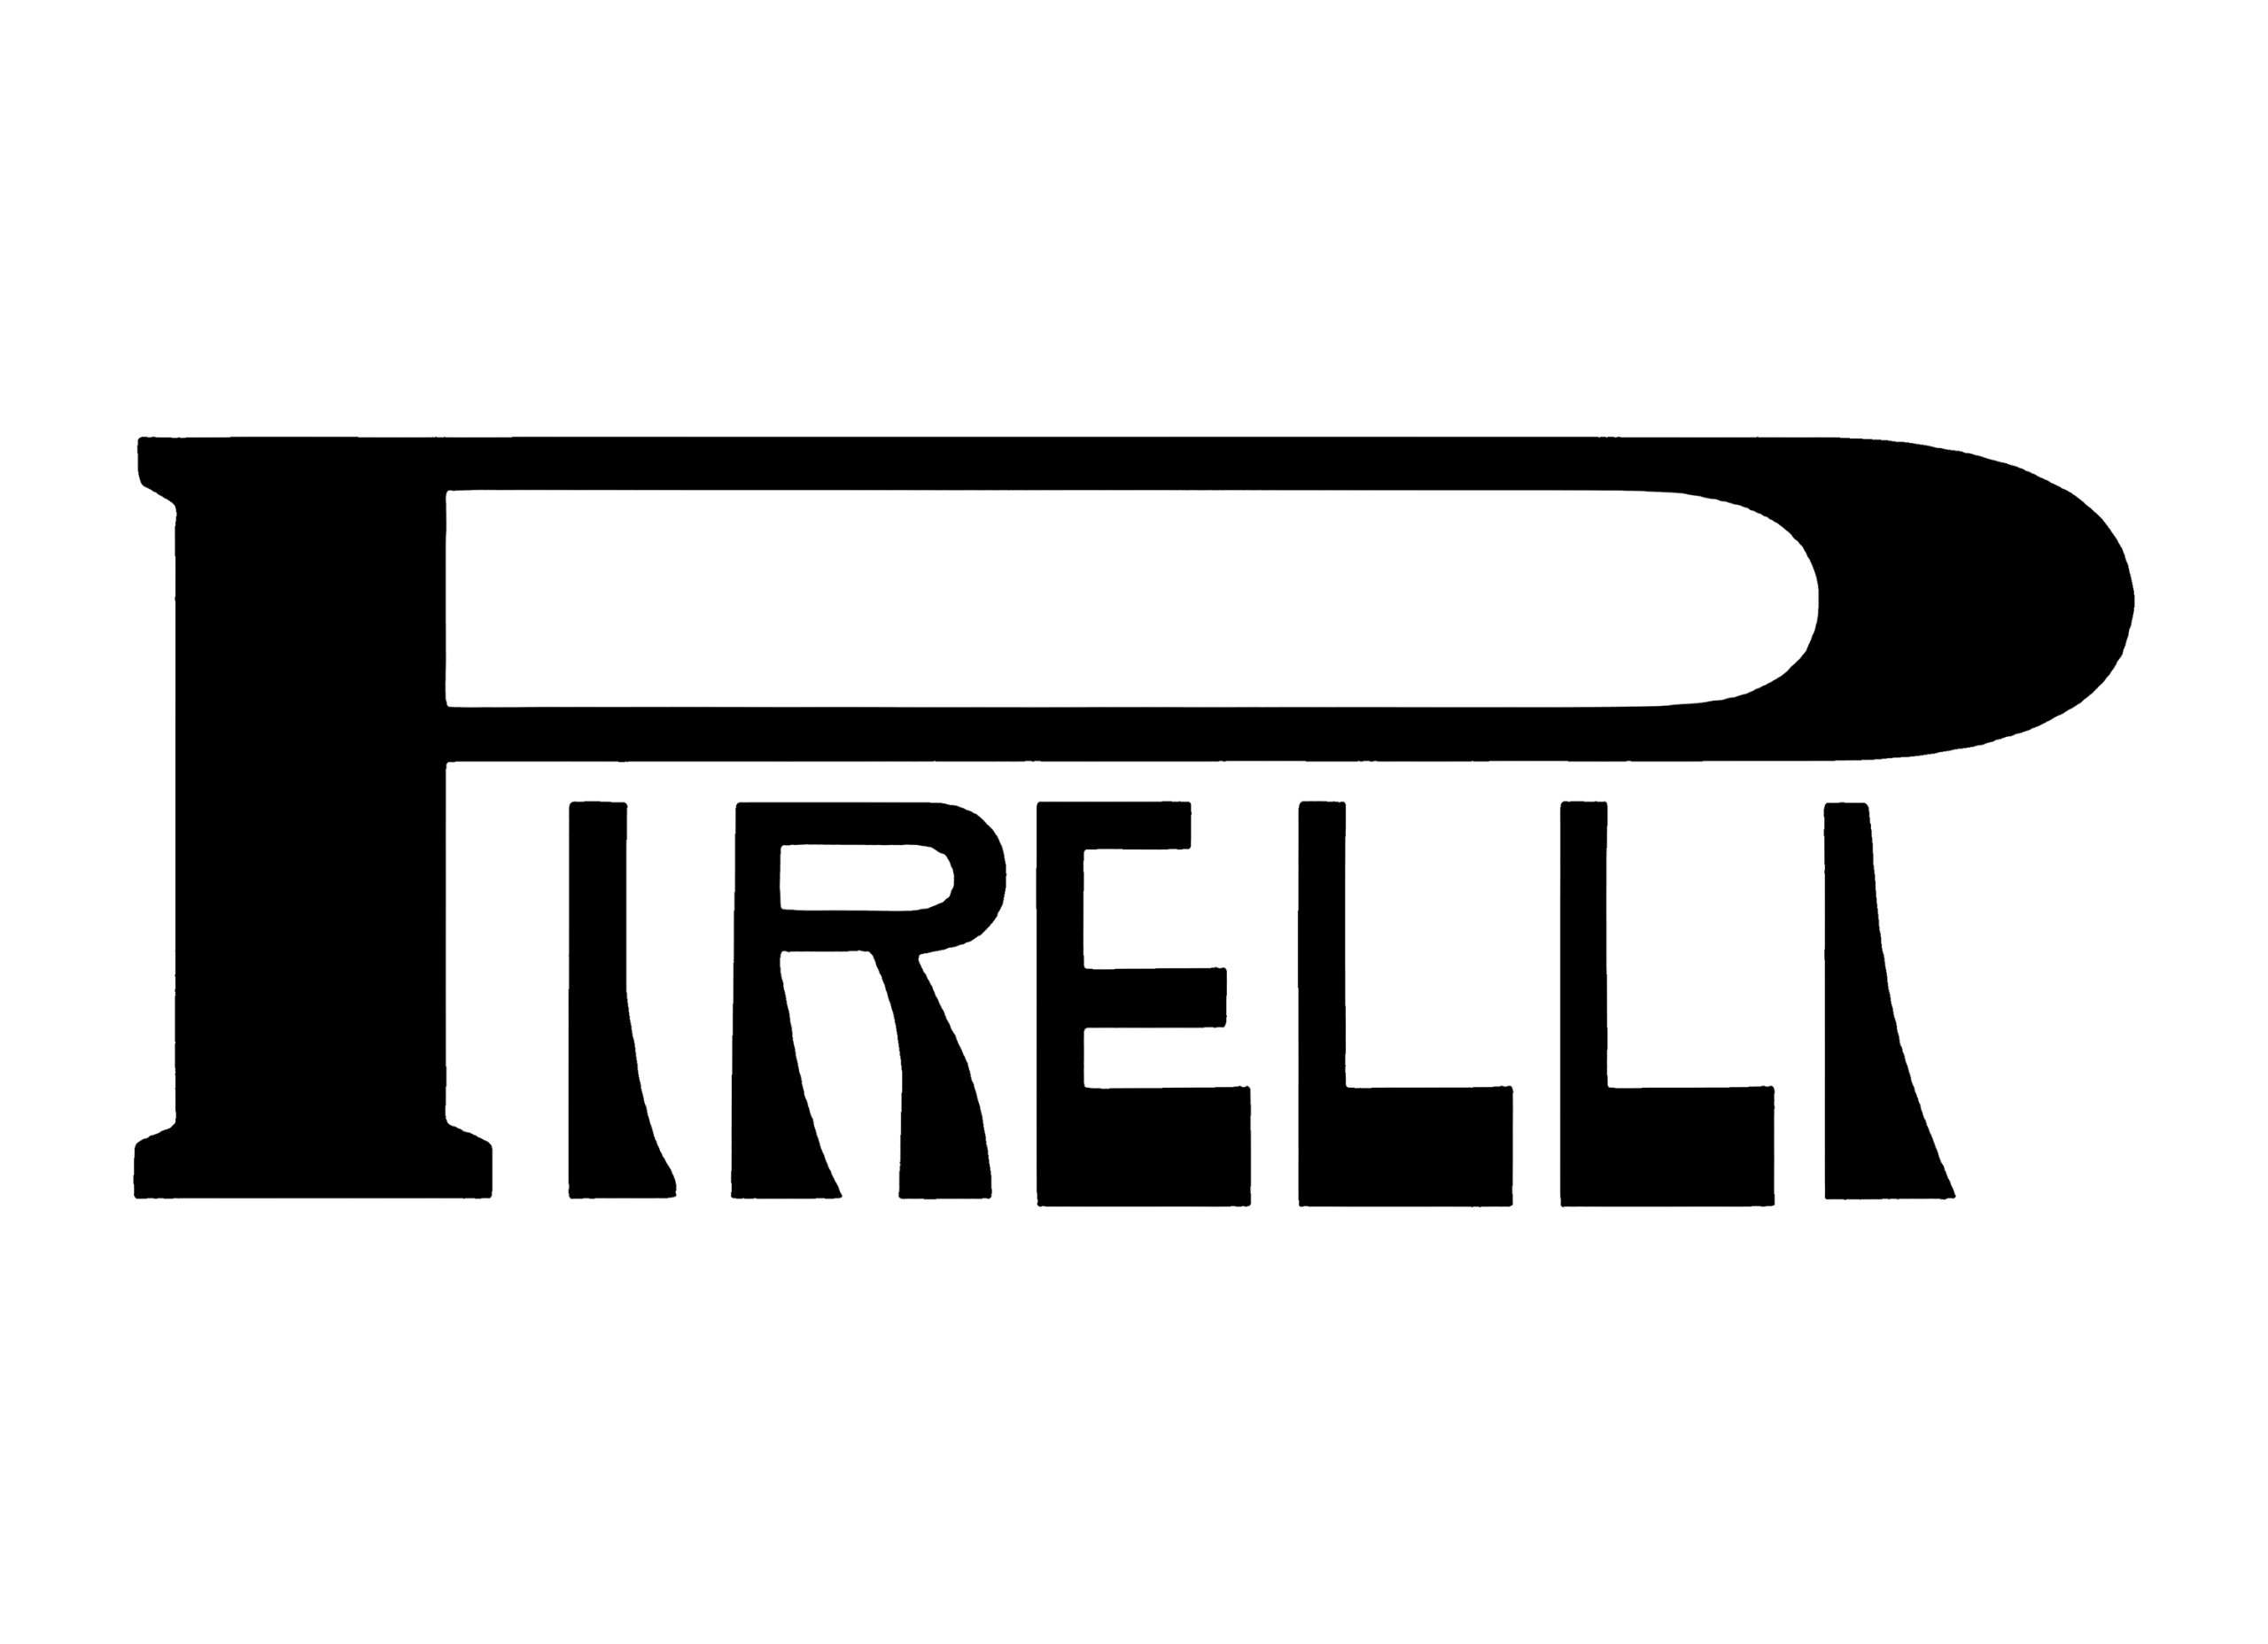 Pirelli logo 1924-1930